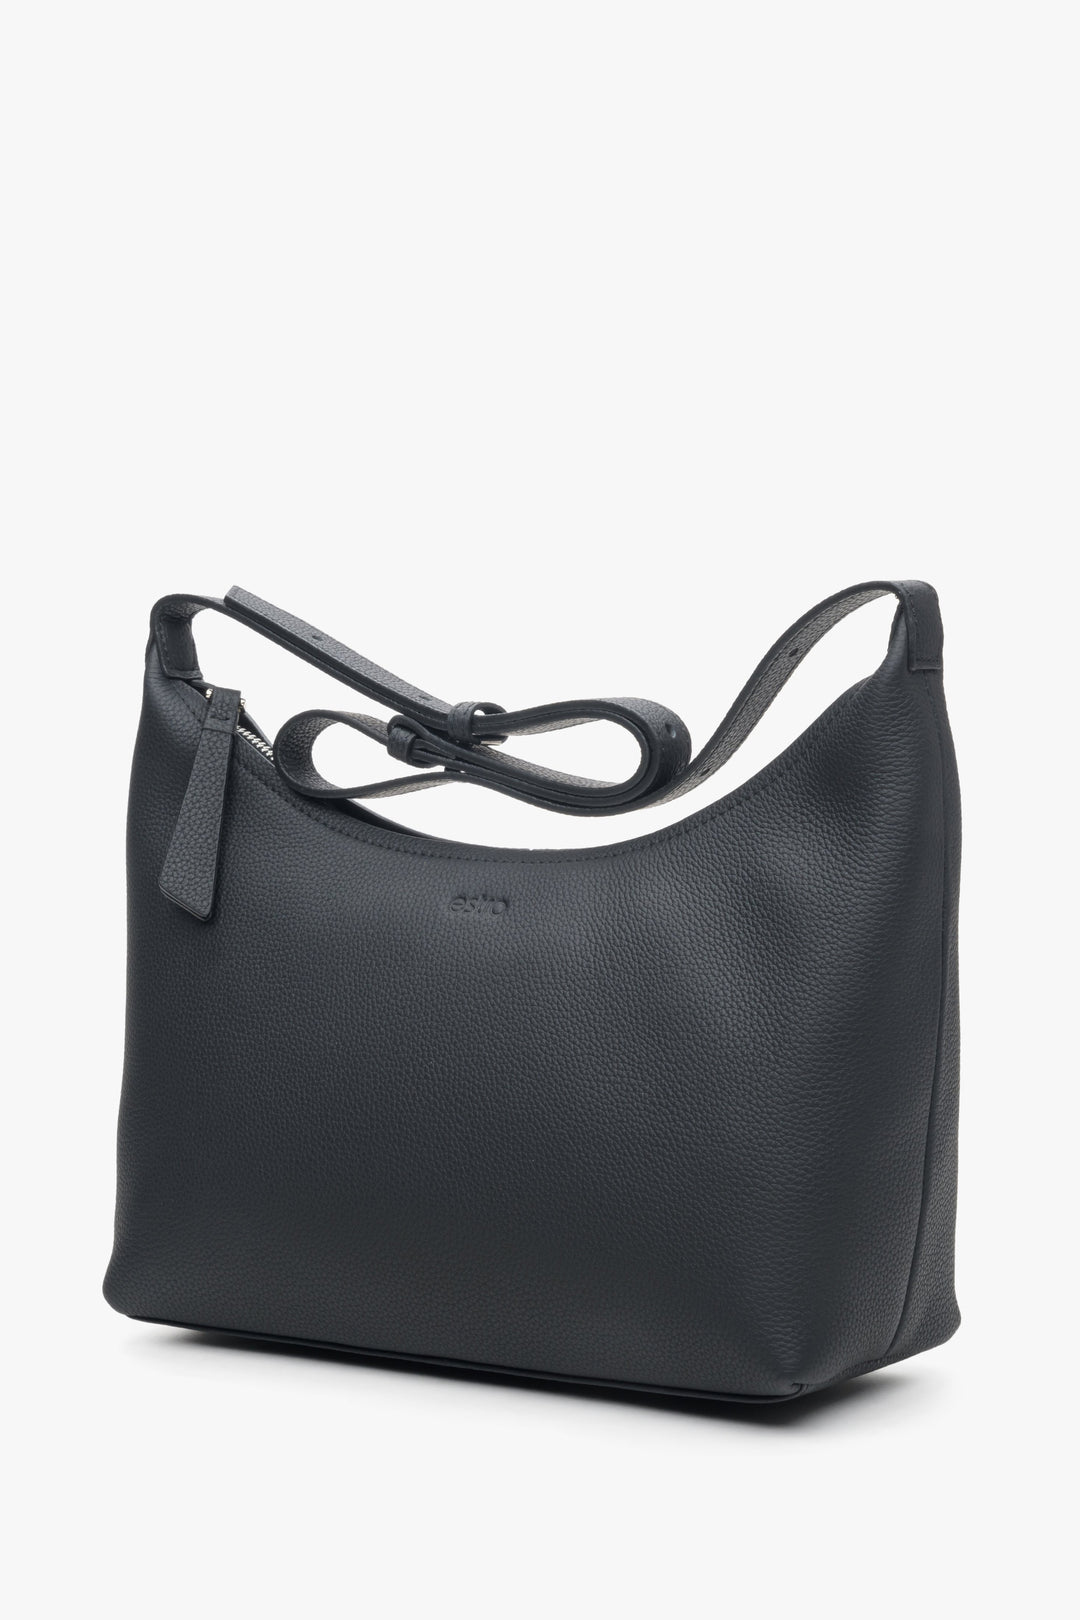 Women's black shoulder bag made of genuine leather by Estro.